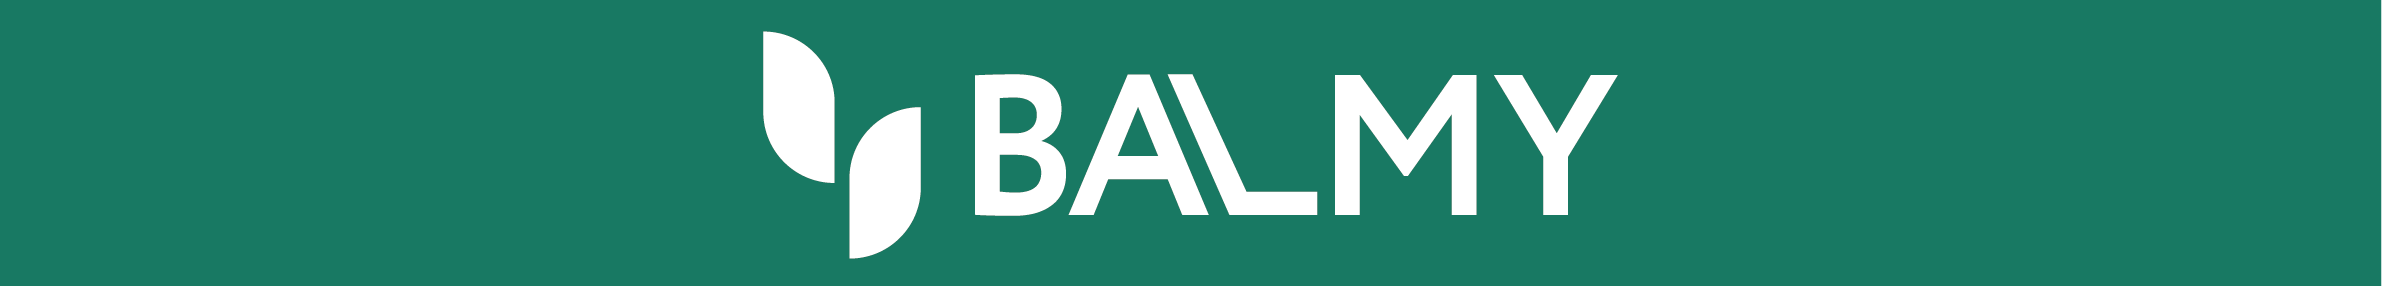 Balmy - бренд товаров для спортивной реабилитации